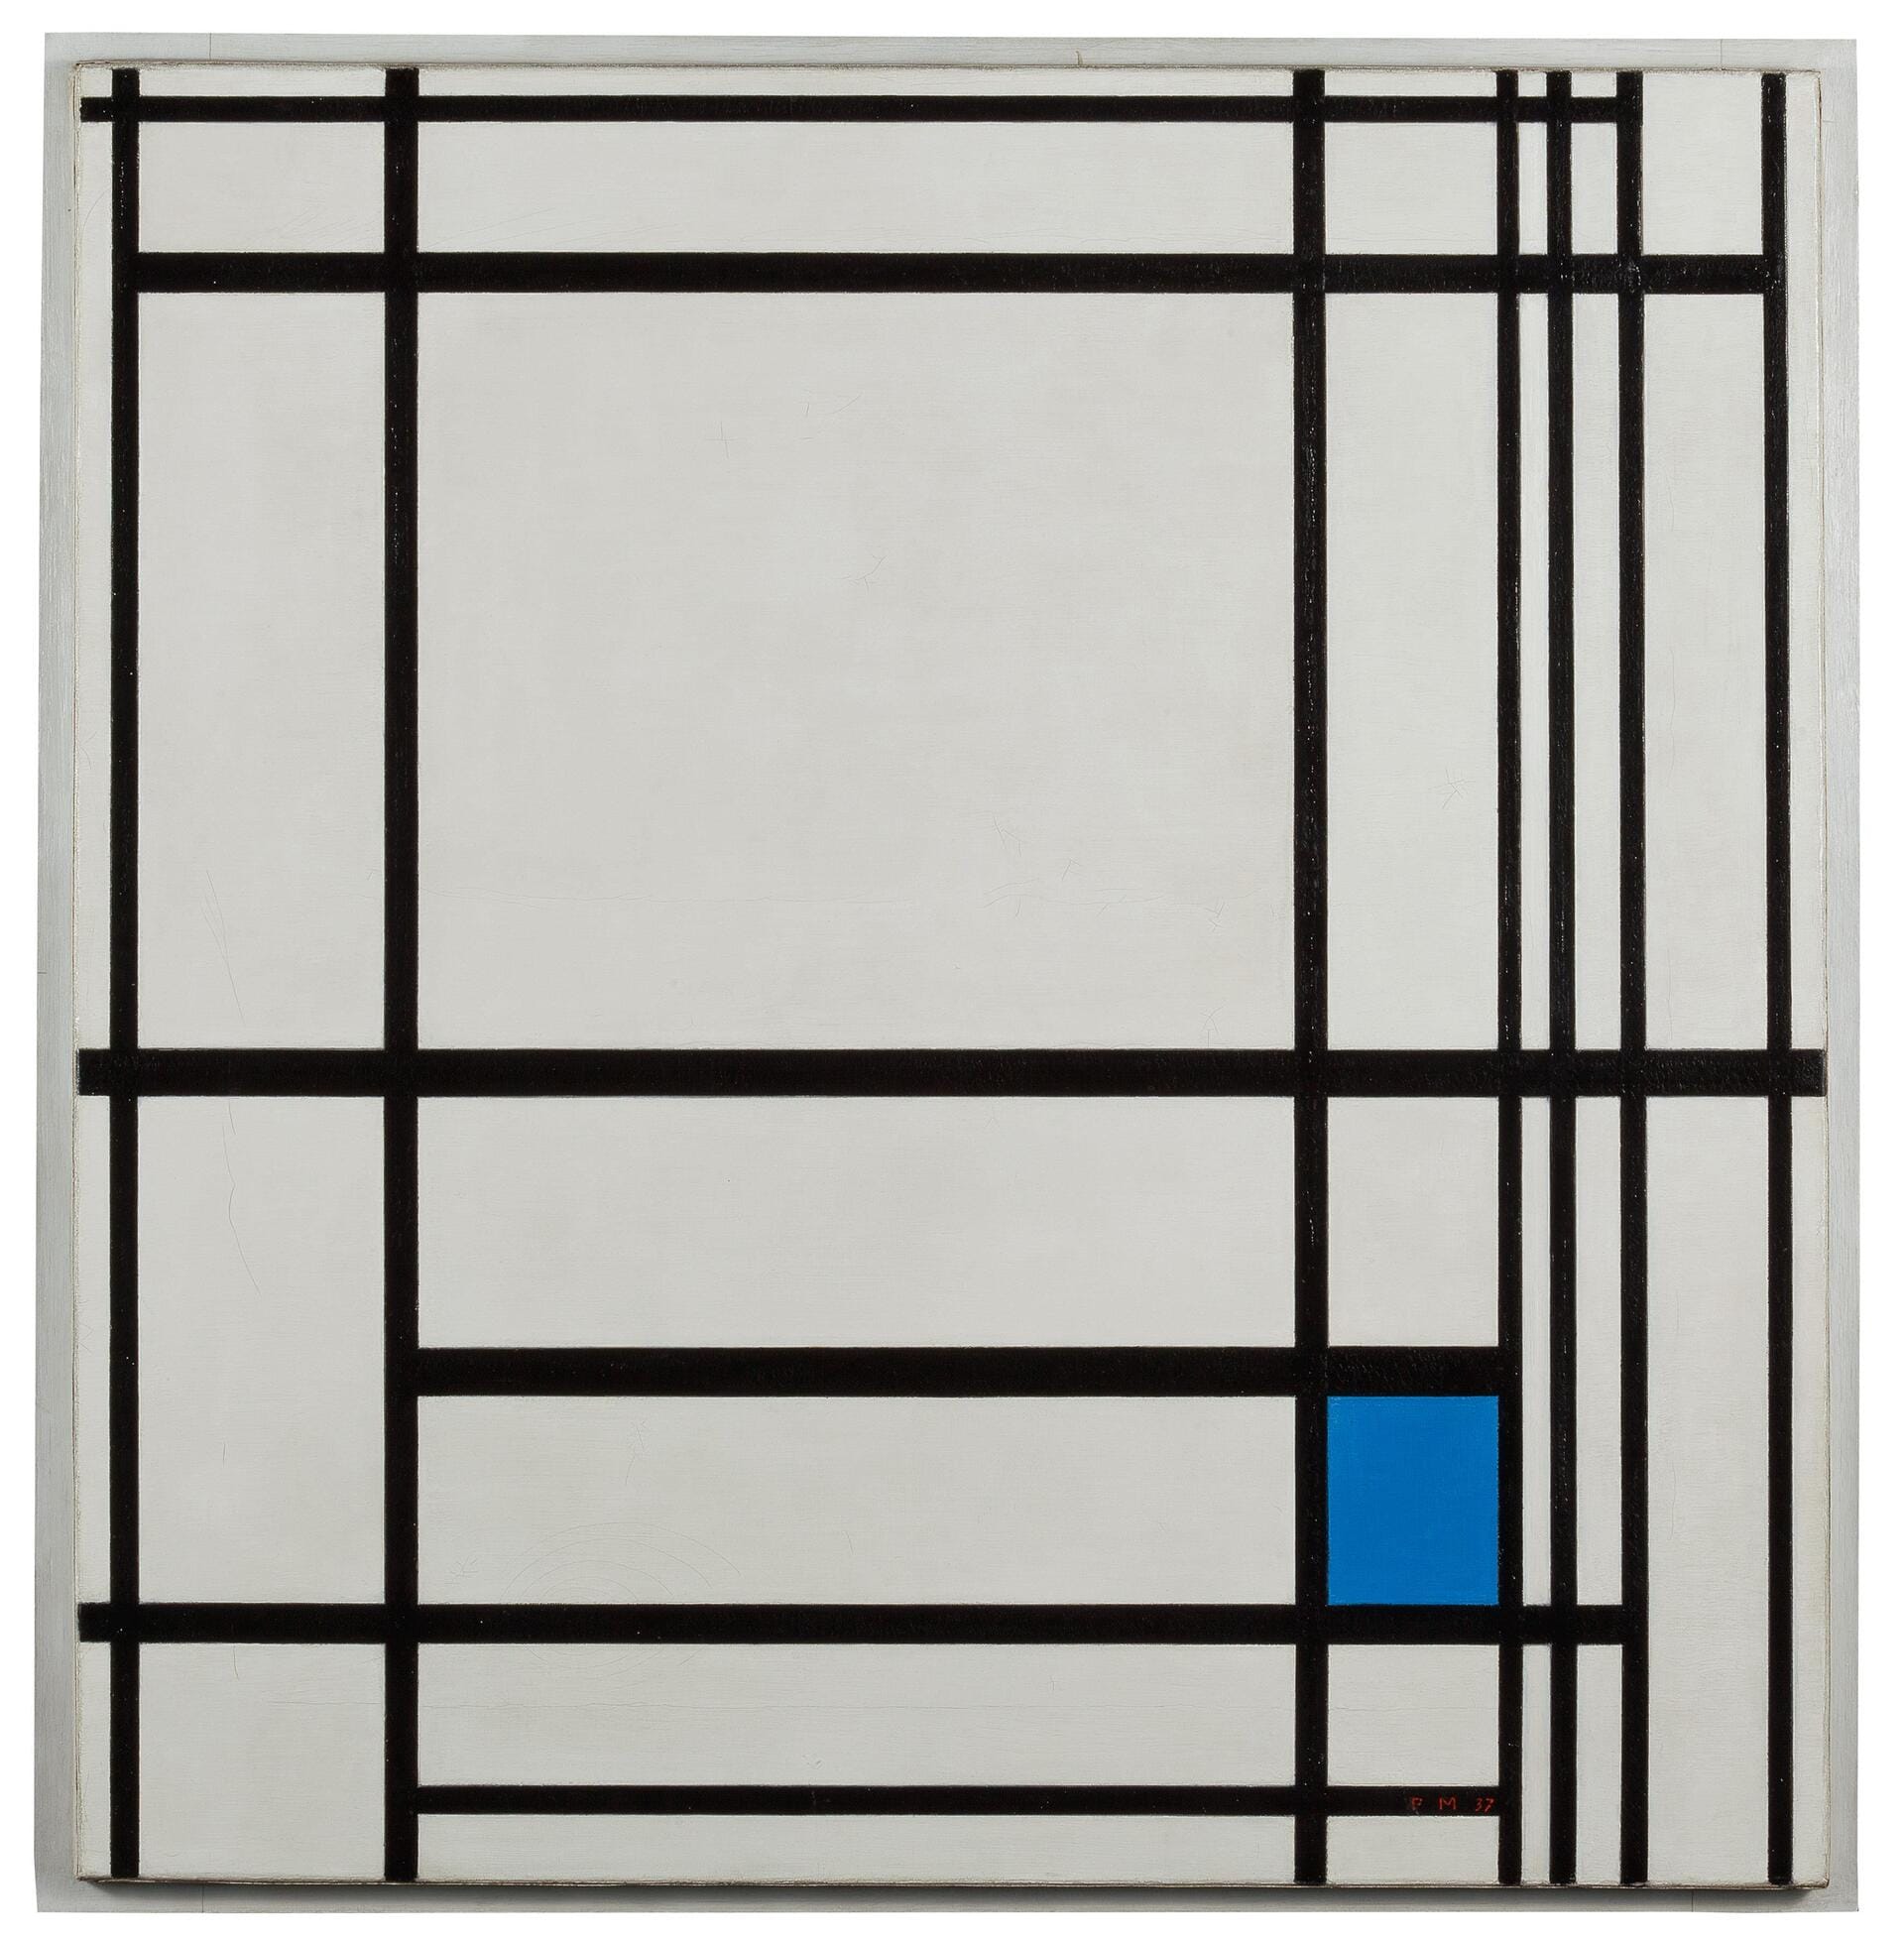 Piet Mondrian (1872-1944): Composizione con linee e colore III, 1937. Olio su tela. Kunstmuseum Den Haag